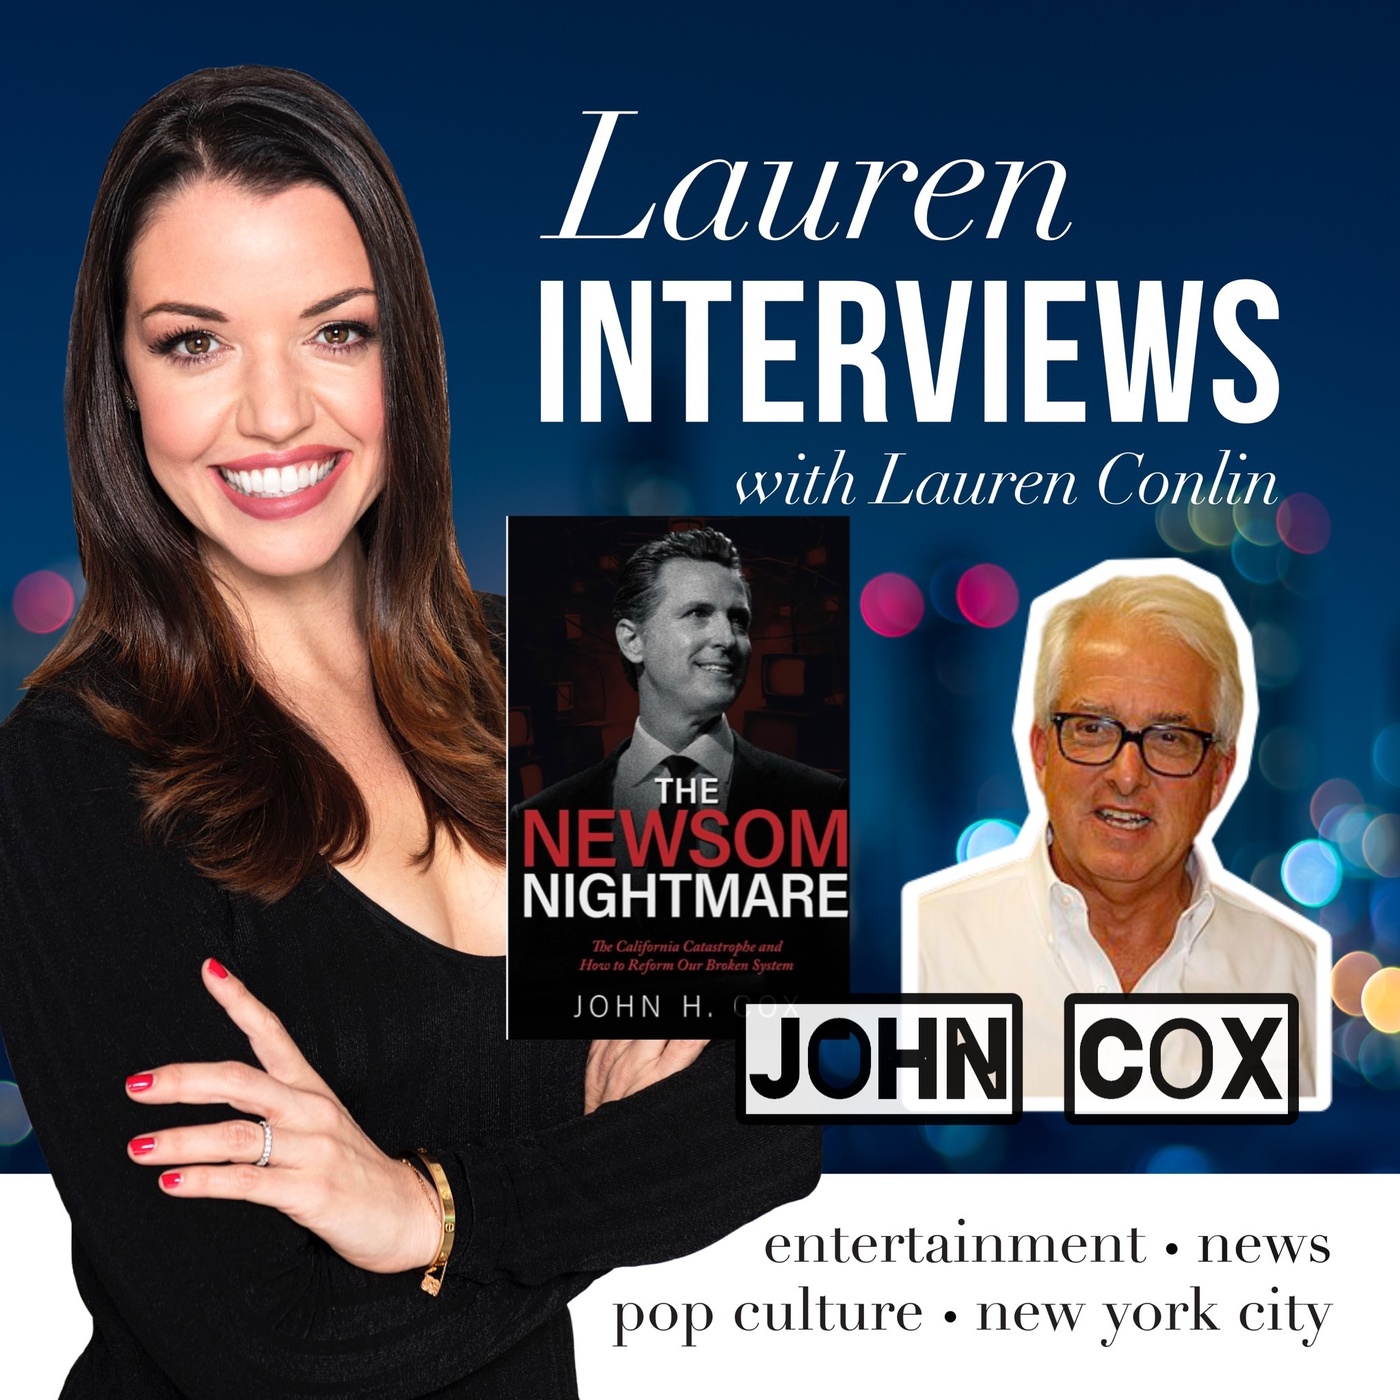 John Cox discusses ”The Newsom Nightmare” ahead of the DeSantis/Newsom debates